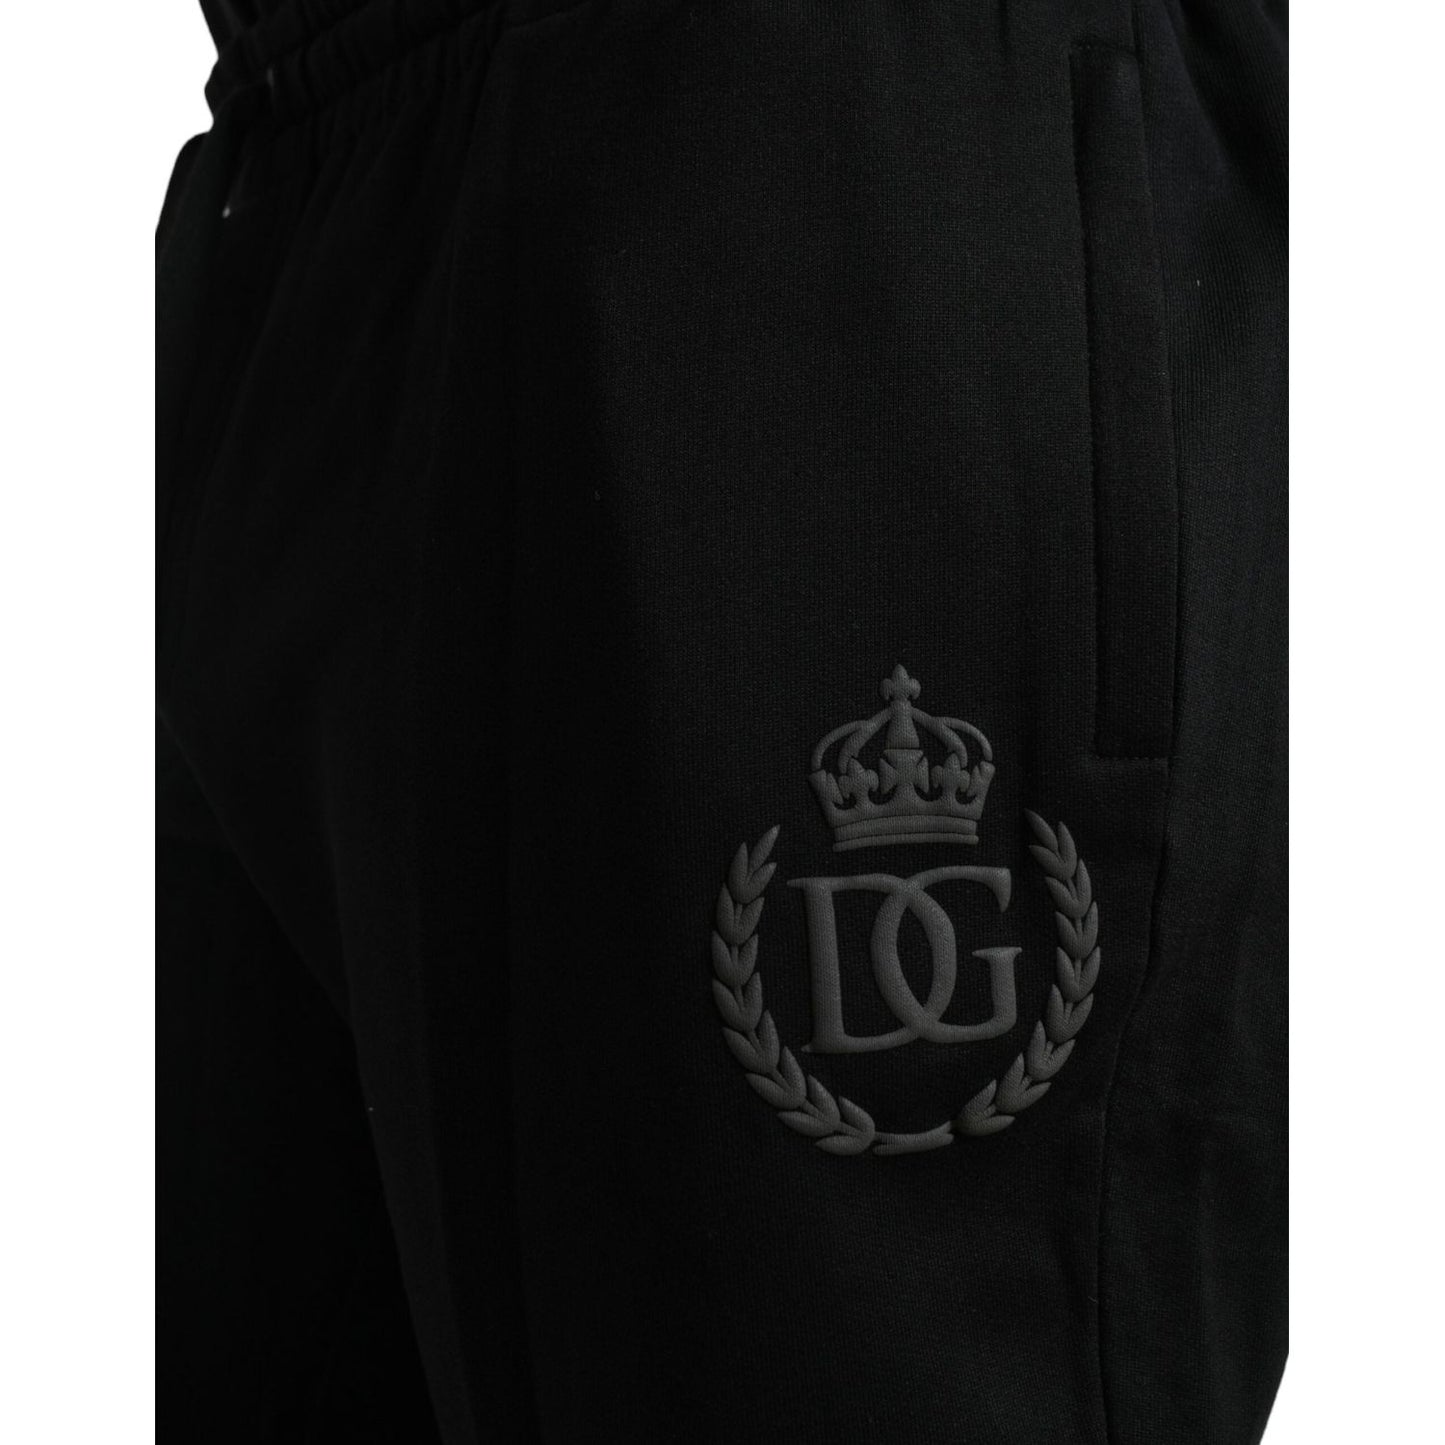 Dolce & Gabbana Elegant Black Cotton Jogger Pants black-cotton-logo-jogger-men-sweatpants-pants